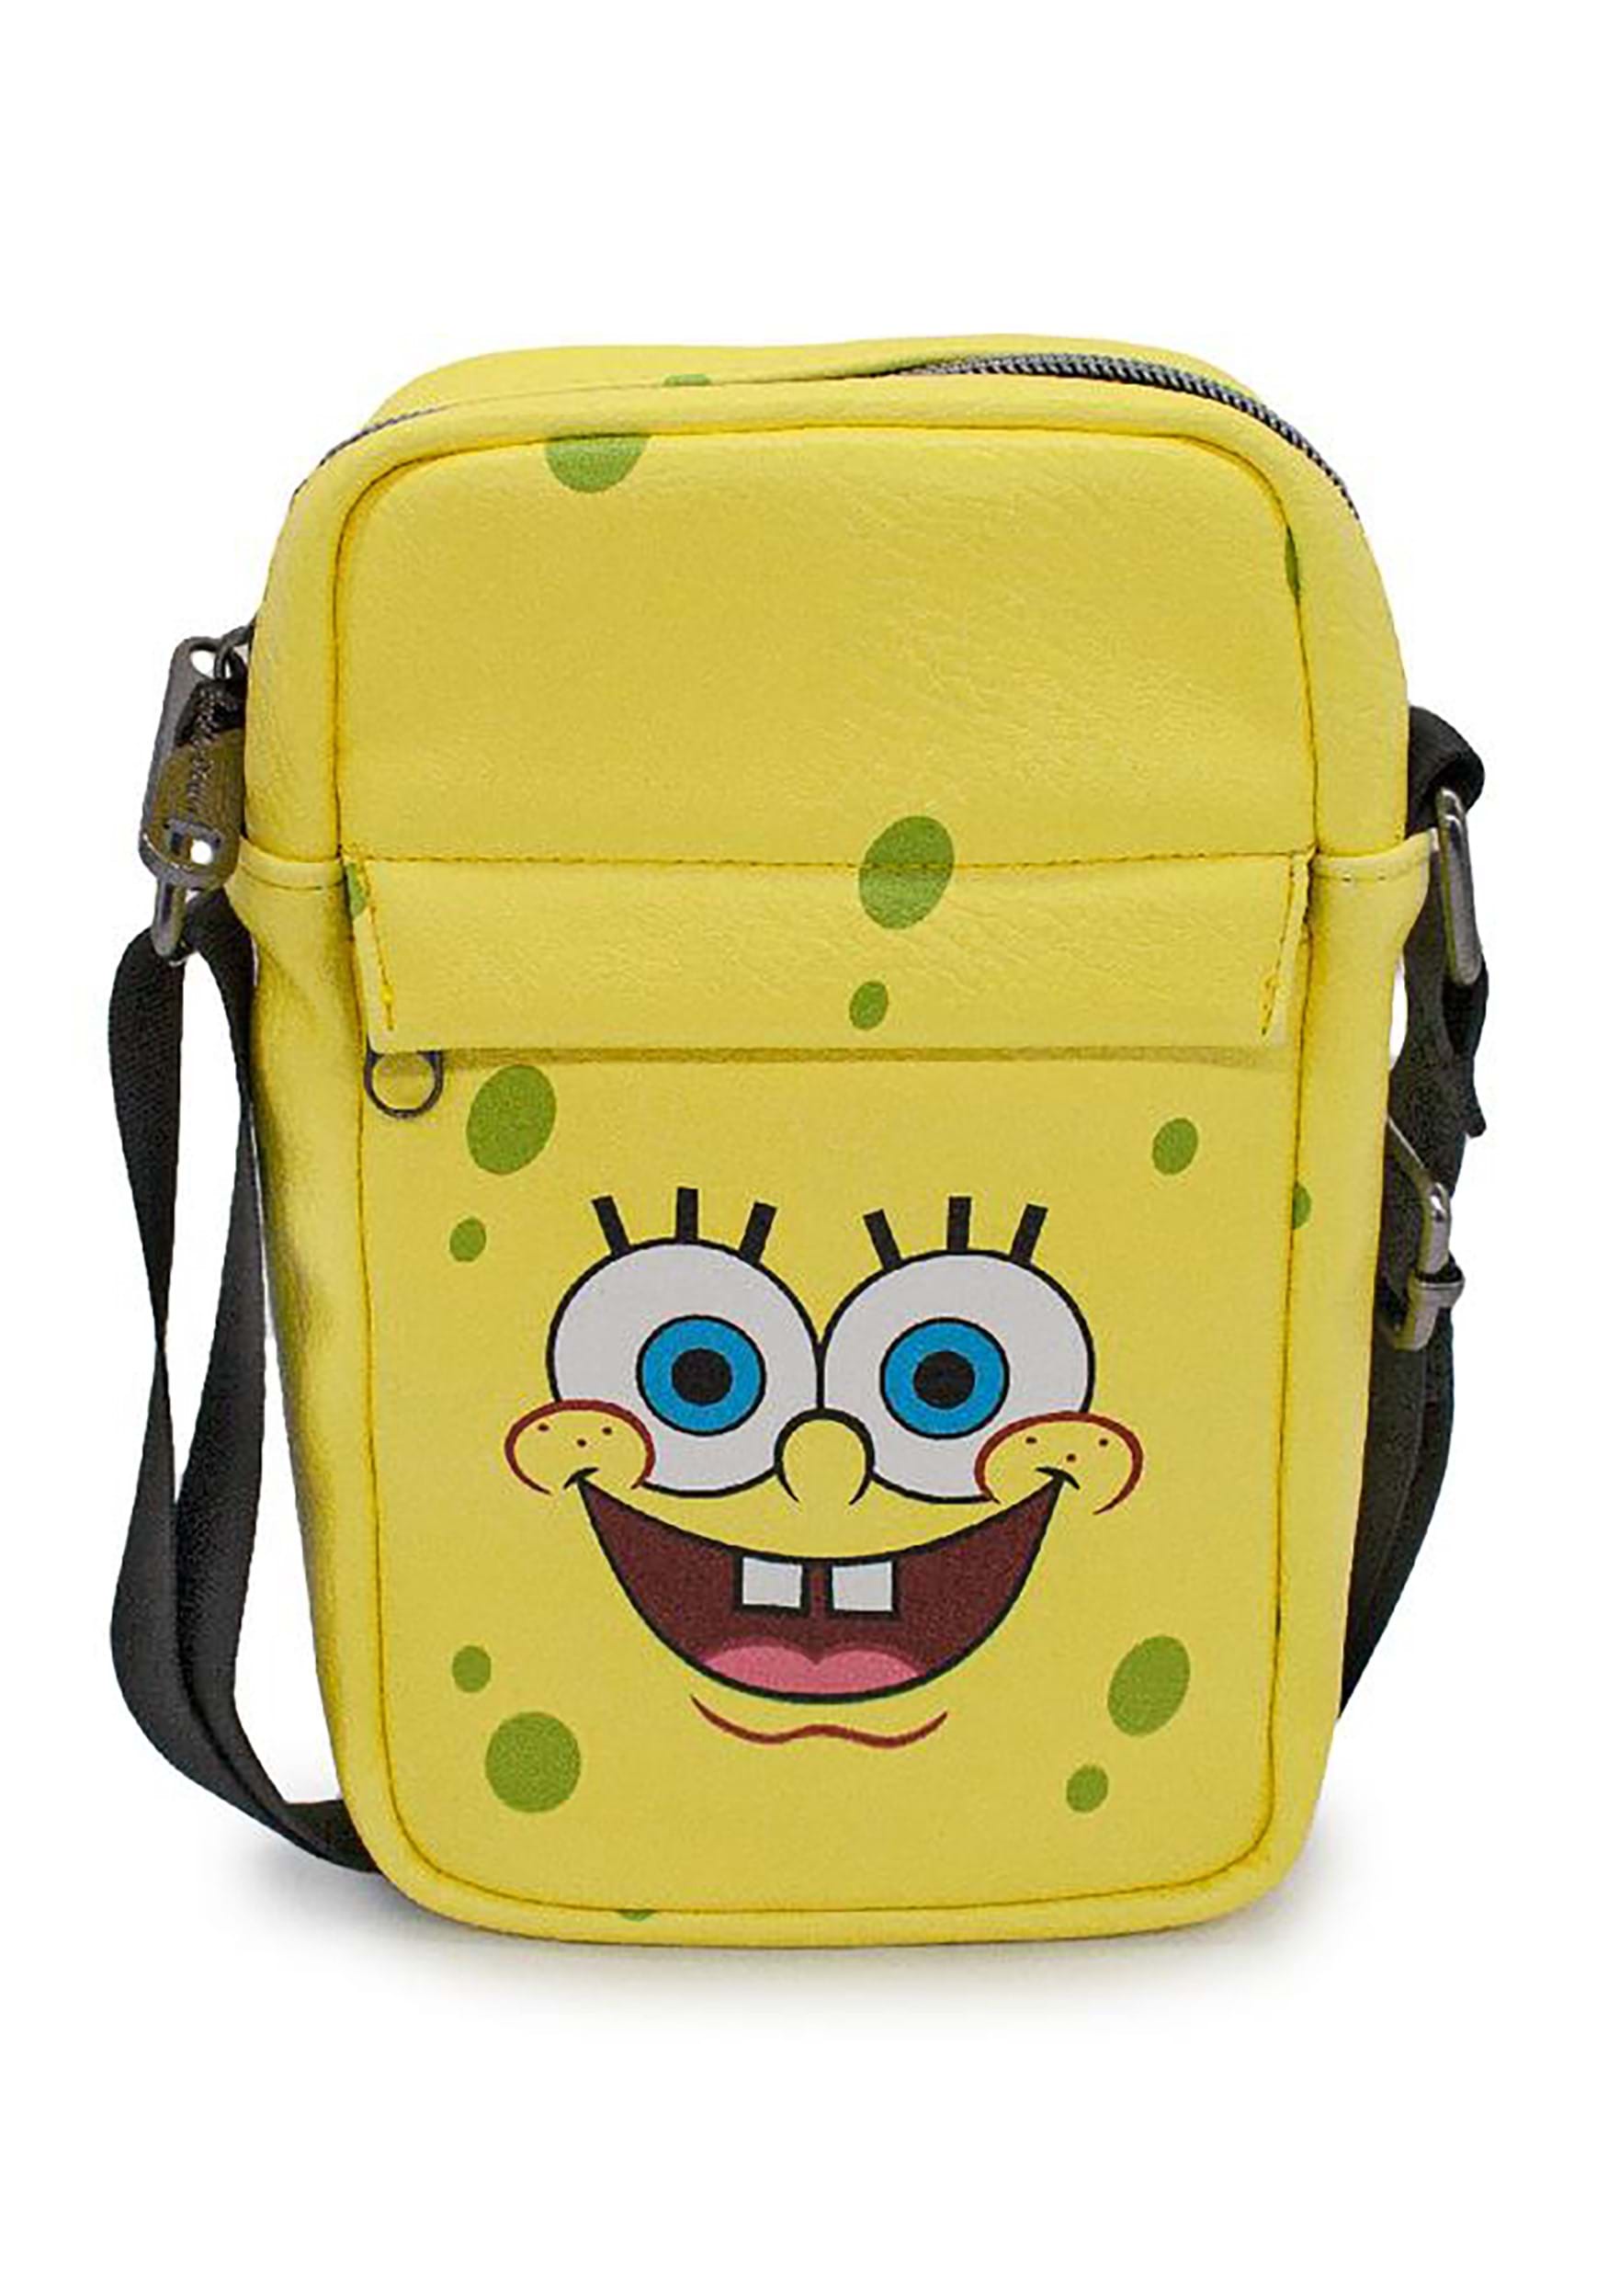 Spongebob Squarepants Crossbody Bag